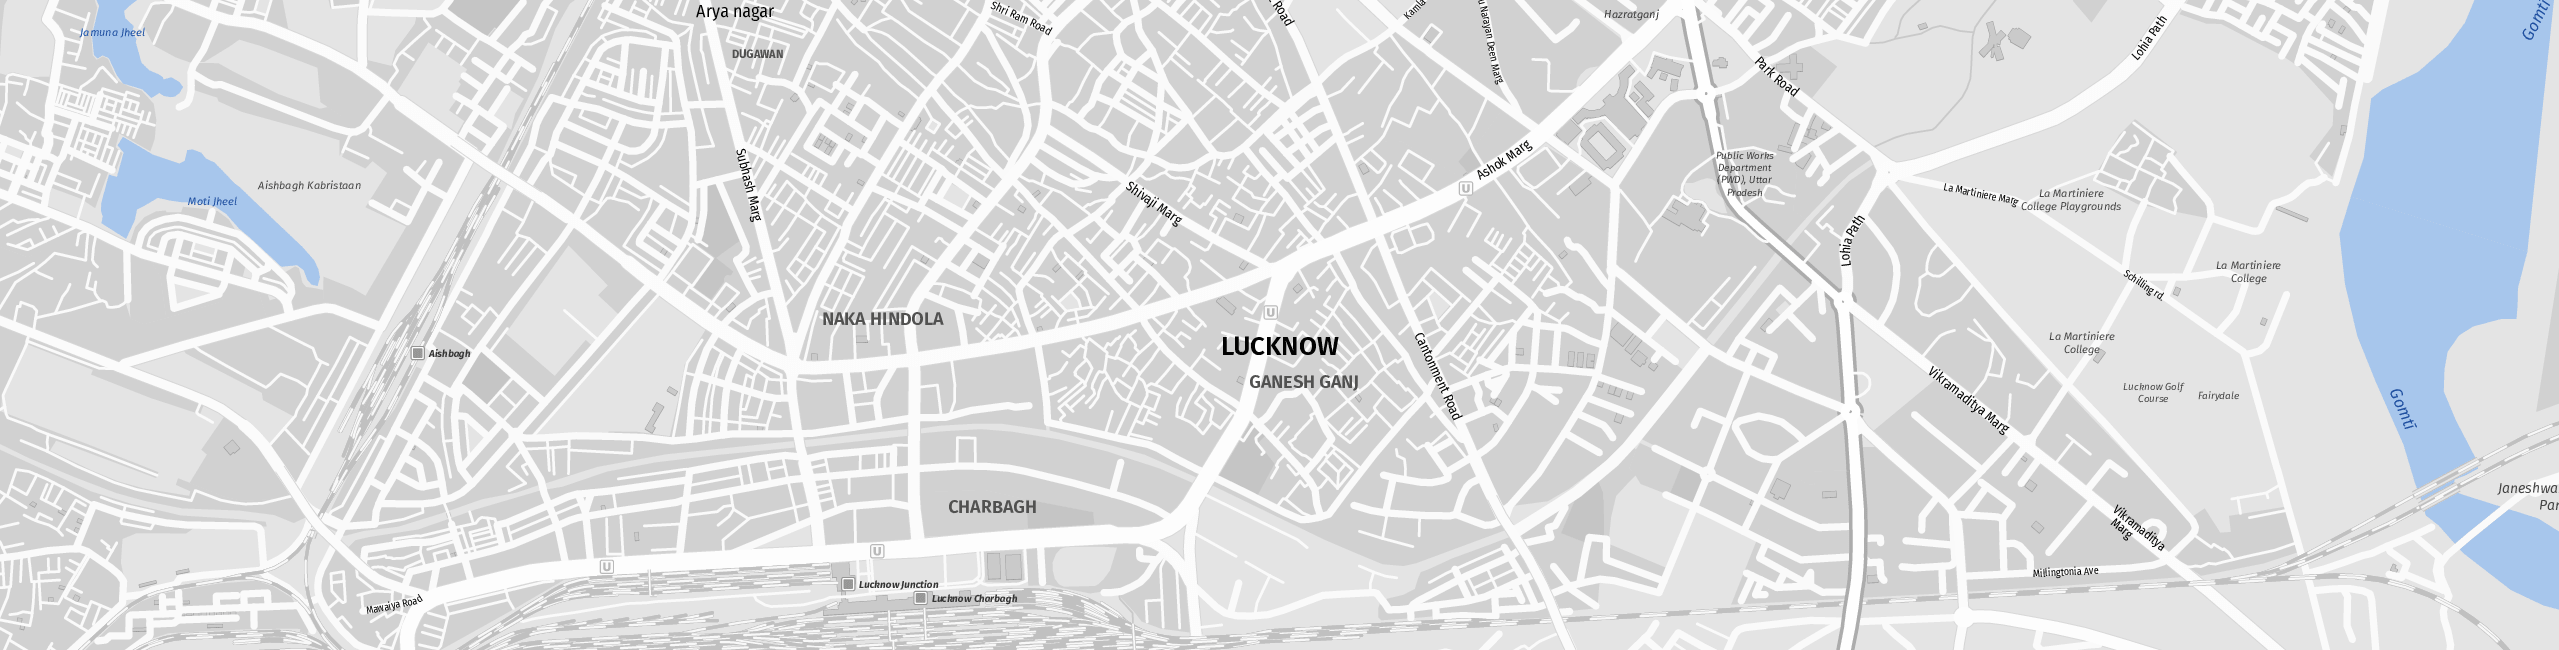 Stadtplan Lucknow zum Downloaden.